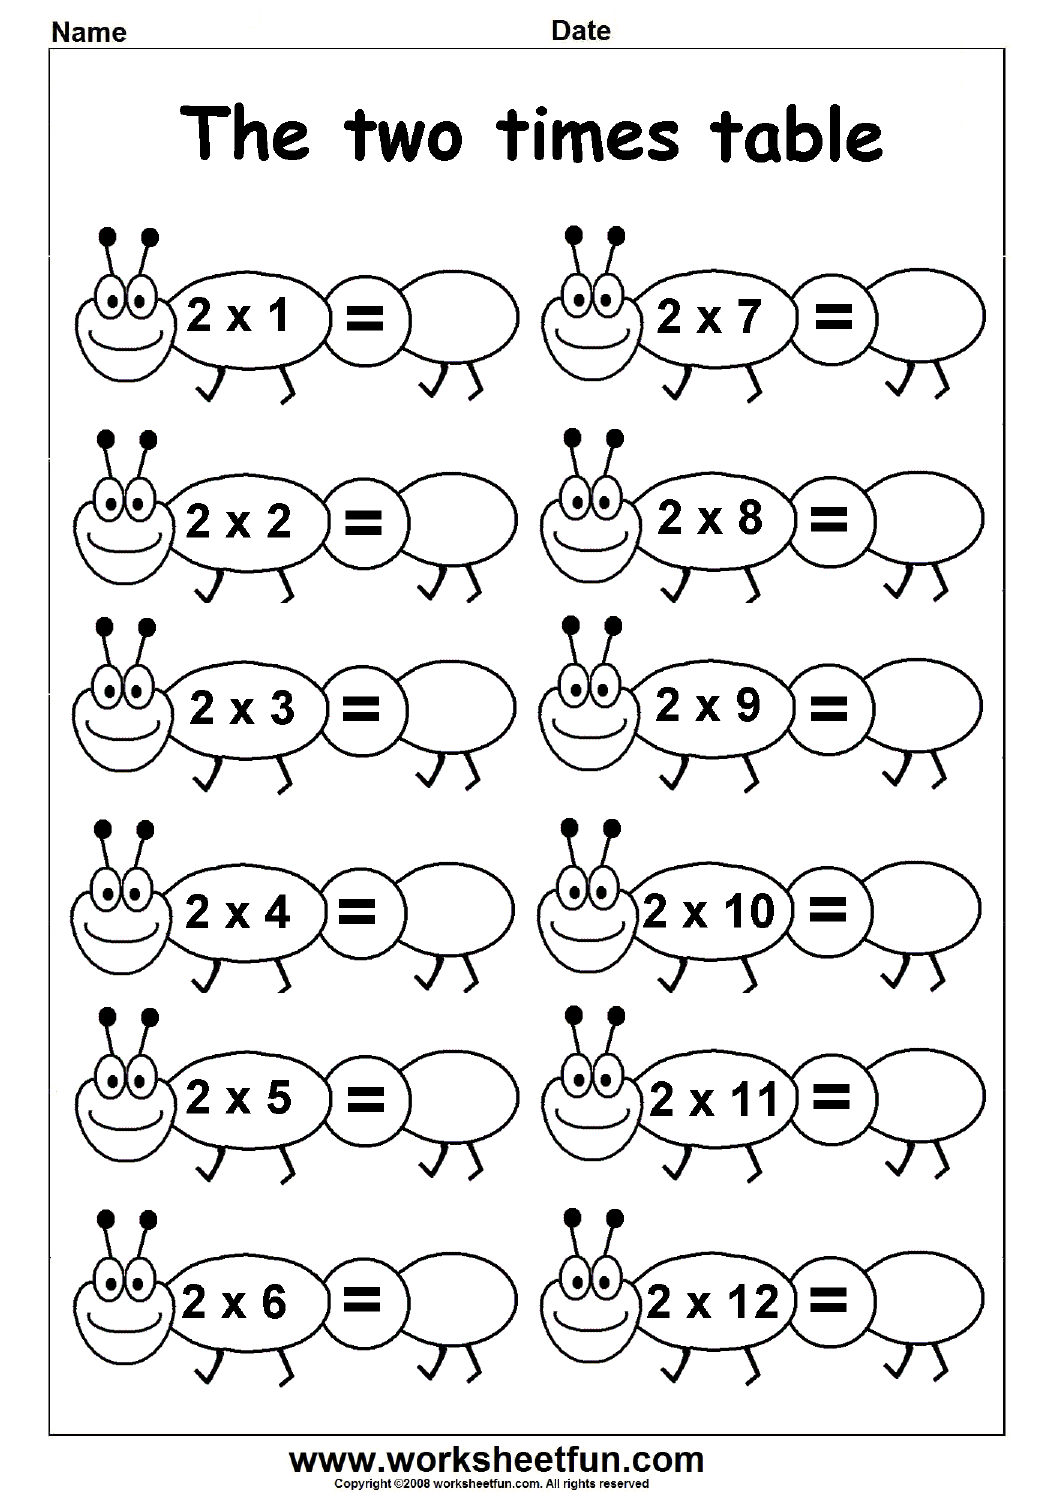 Multiplication Times Tables Worksheets â 2, 3, 4, 5, 6 & 7 Times